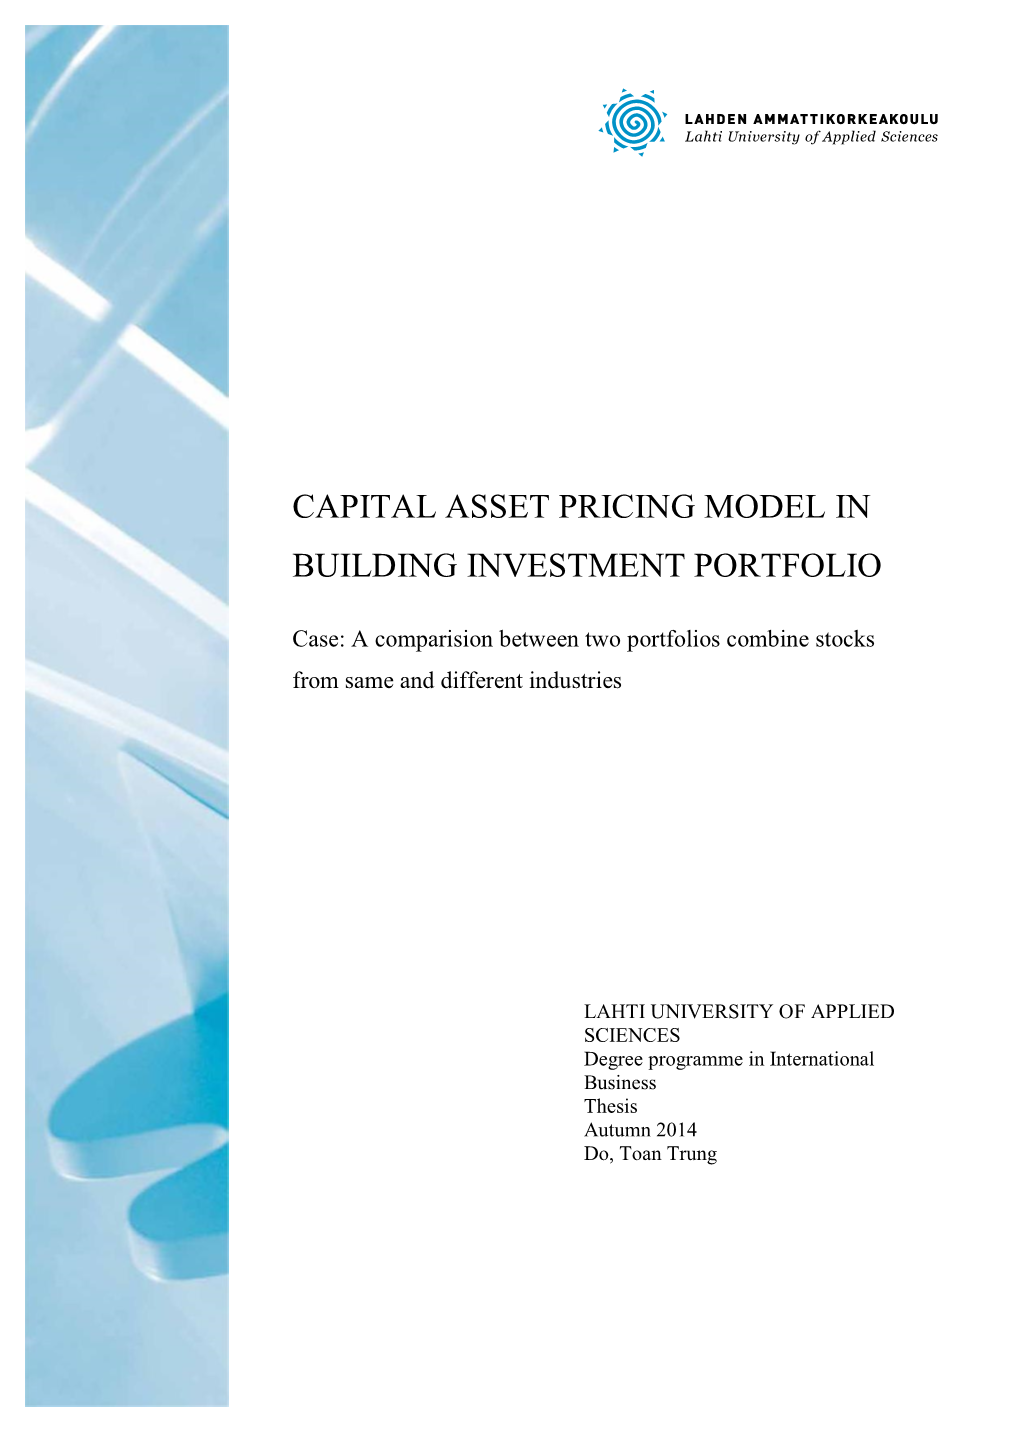 Capital Asset Pricing Model in Building Investment Portfolio